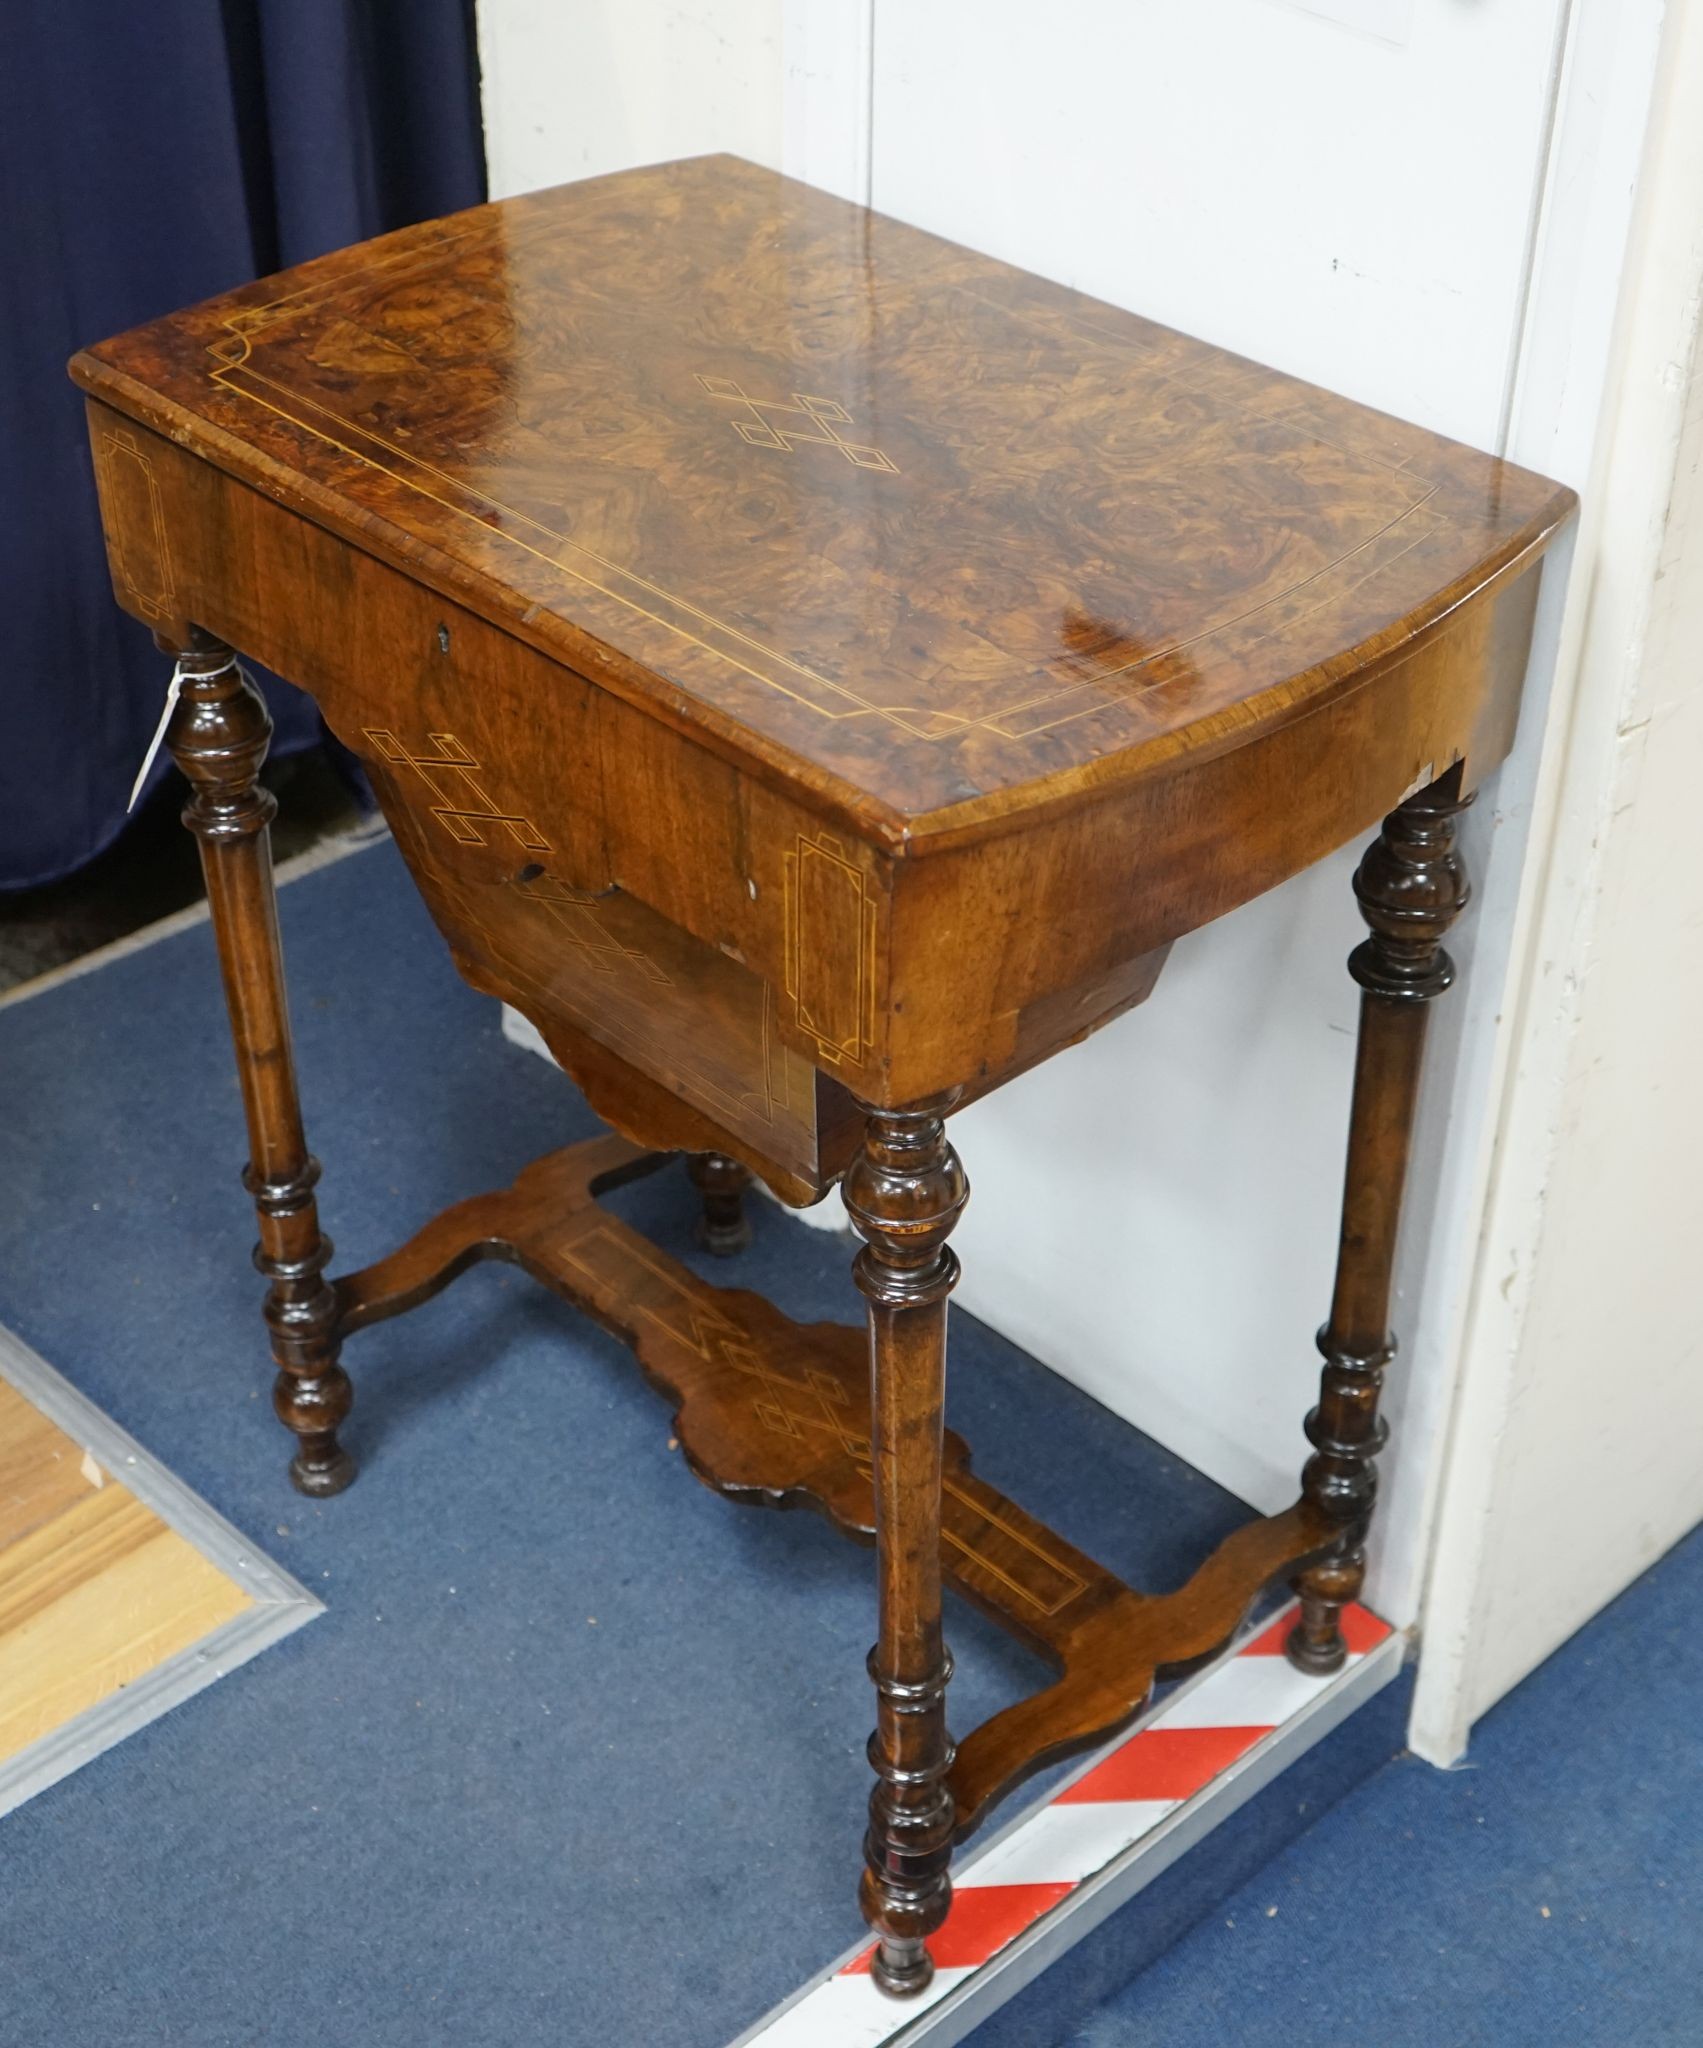 A Victorian inlaid burr walnut work table, width 62cm, depth 40cm, height 72cm